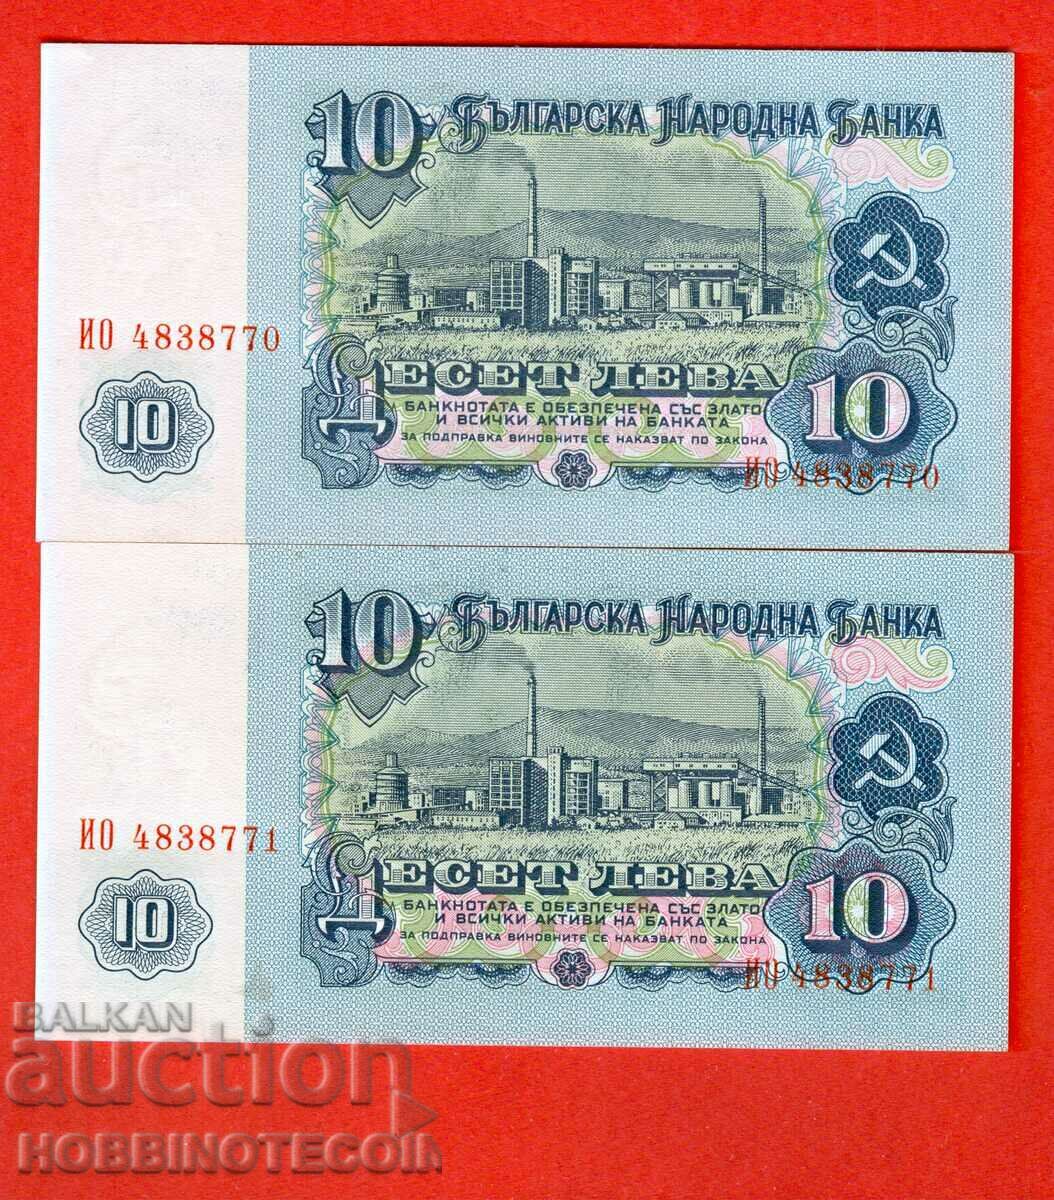 BULGARIA BULGARIA 2 x 10 Leva 7 digits SERIAL NO. 1974 UNC